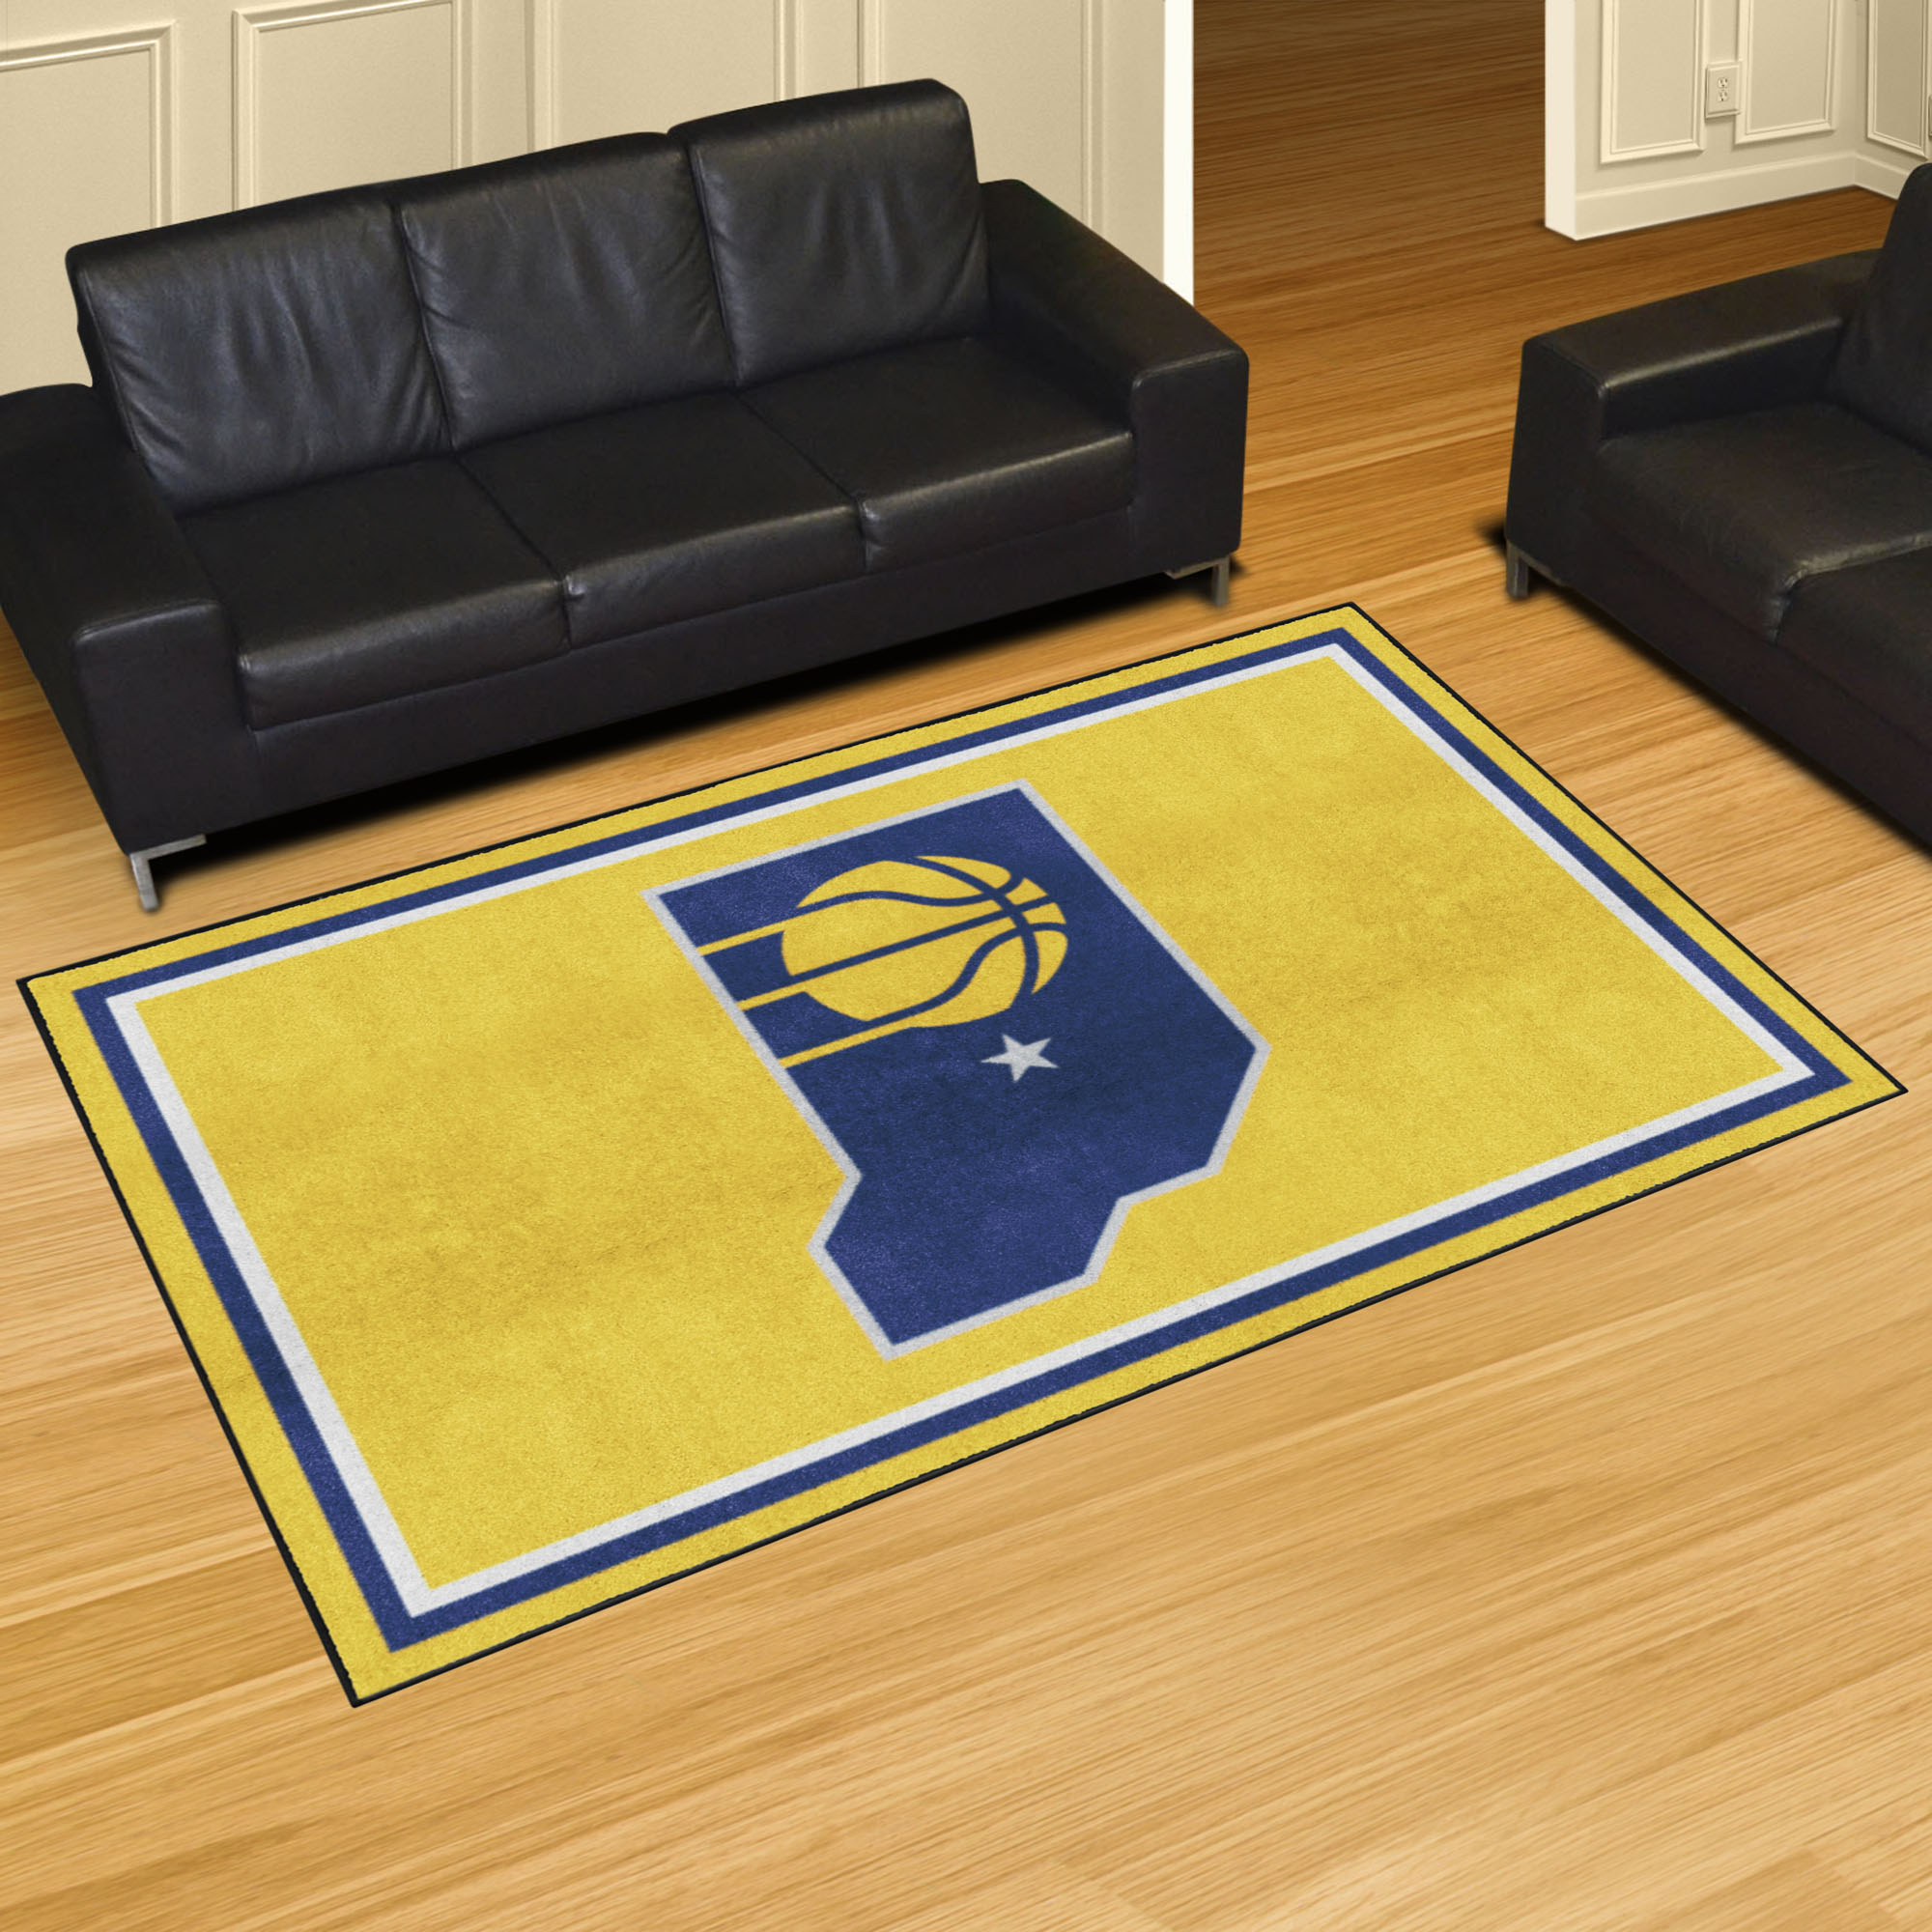 Indiana Pacers Area Rug - 5' x 8' Alt Logo Nylon